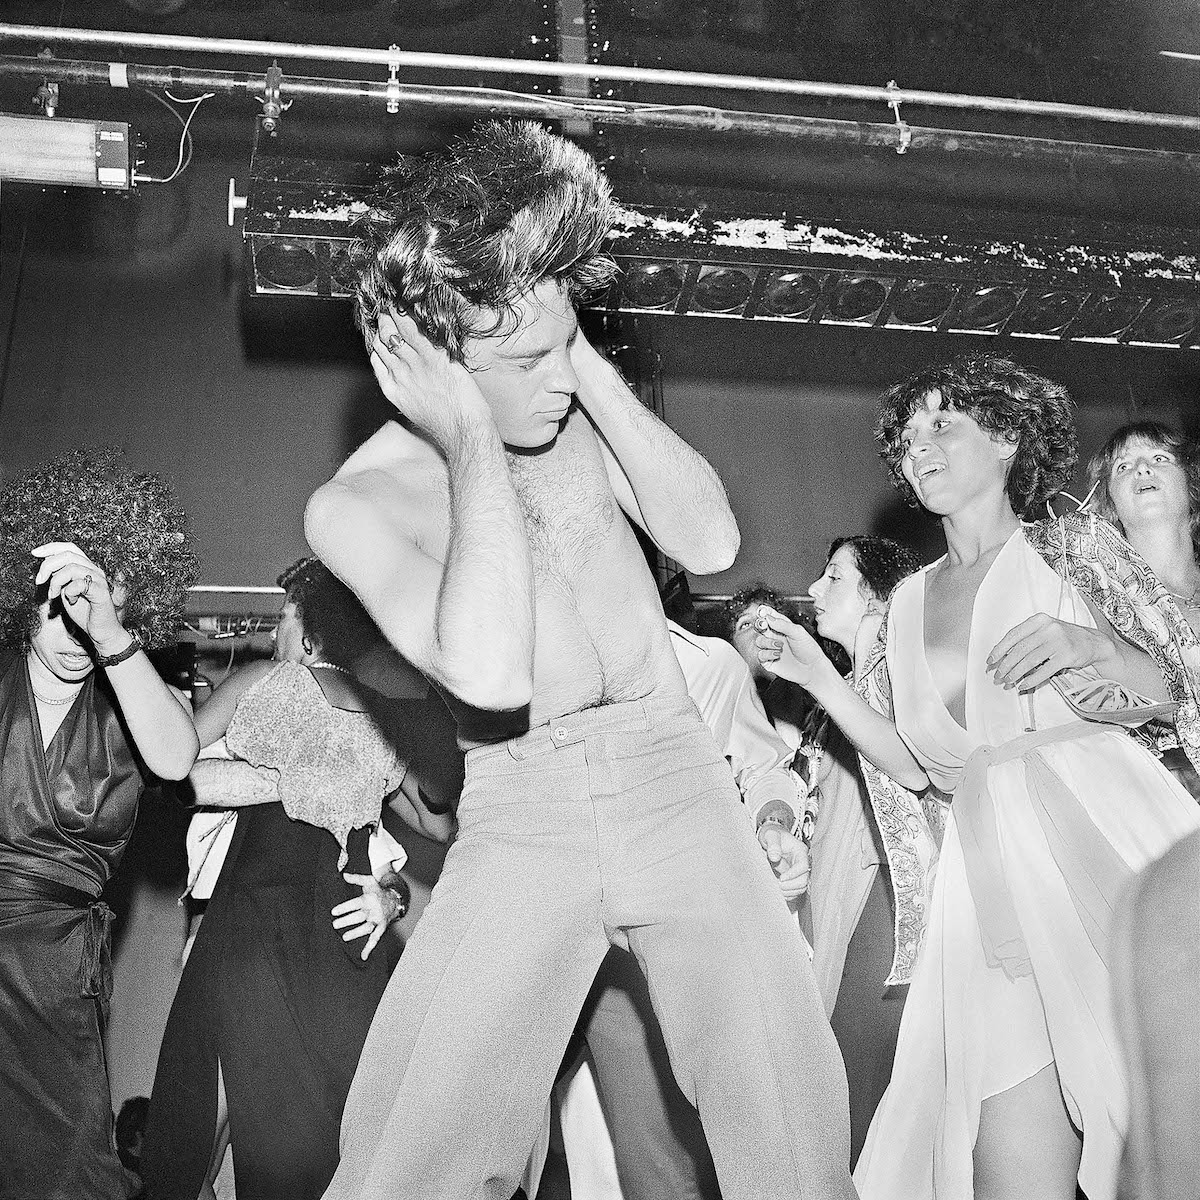 Jj Holding Head As Hair Flies While Dancing With Judi Jupiter, Studio 54, July 1977